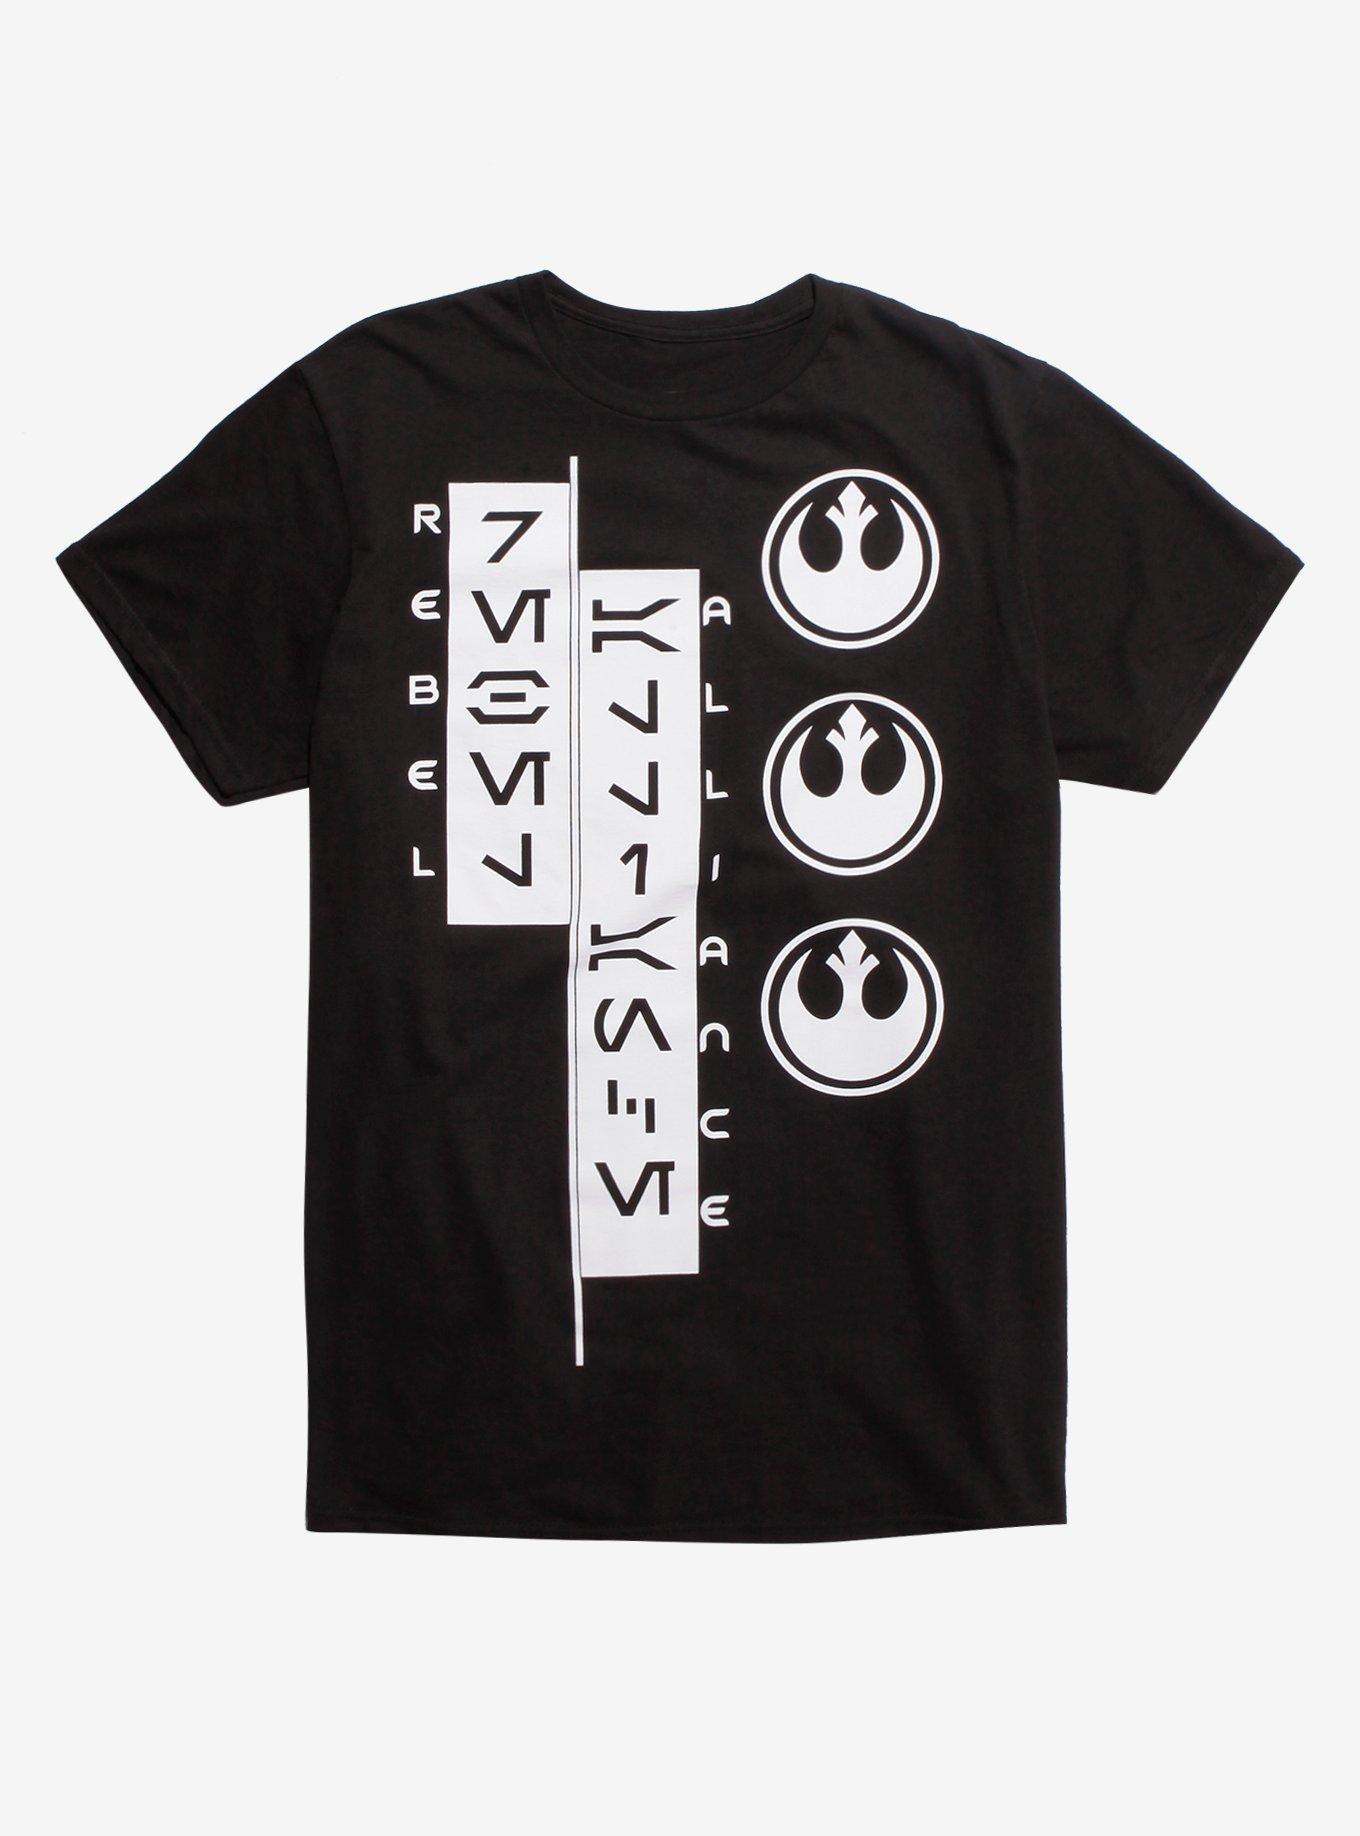 Star Wars Aurebesh Rebel Alliance T-Shirt | Hot Topic